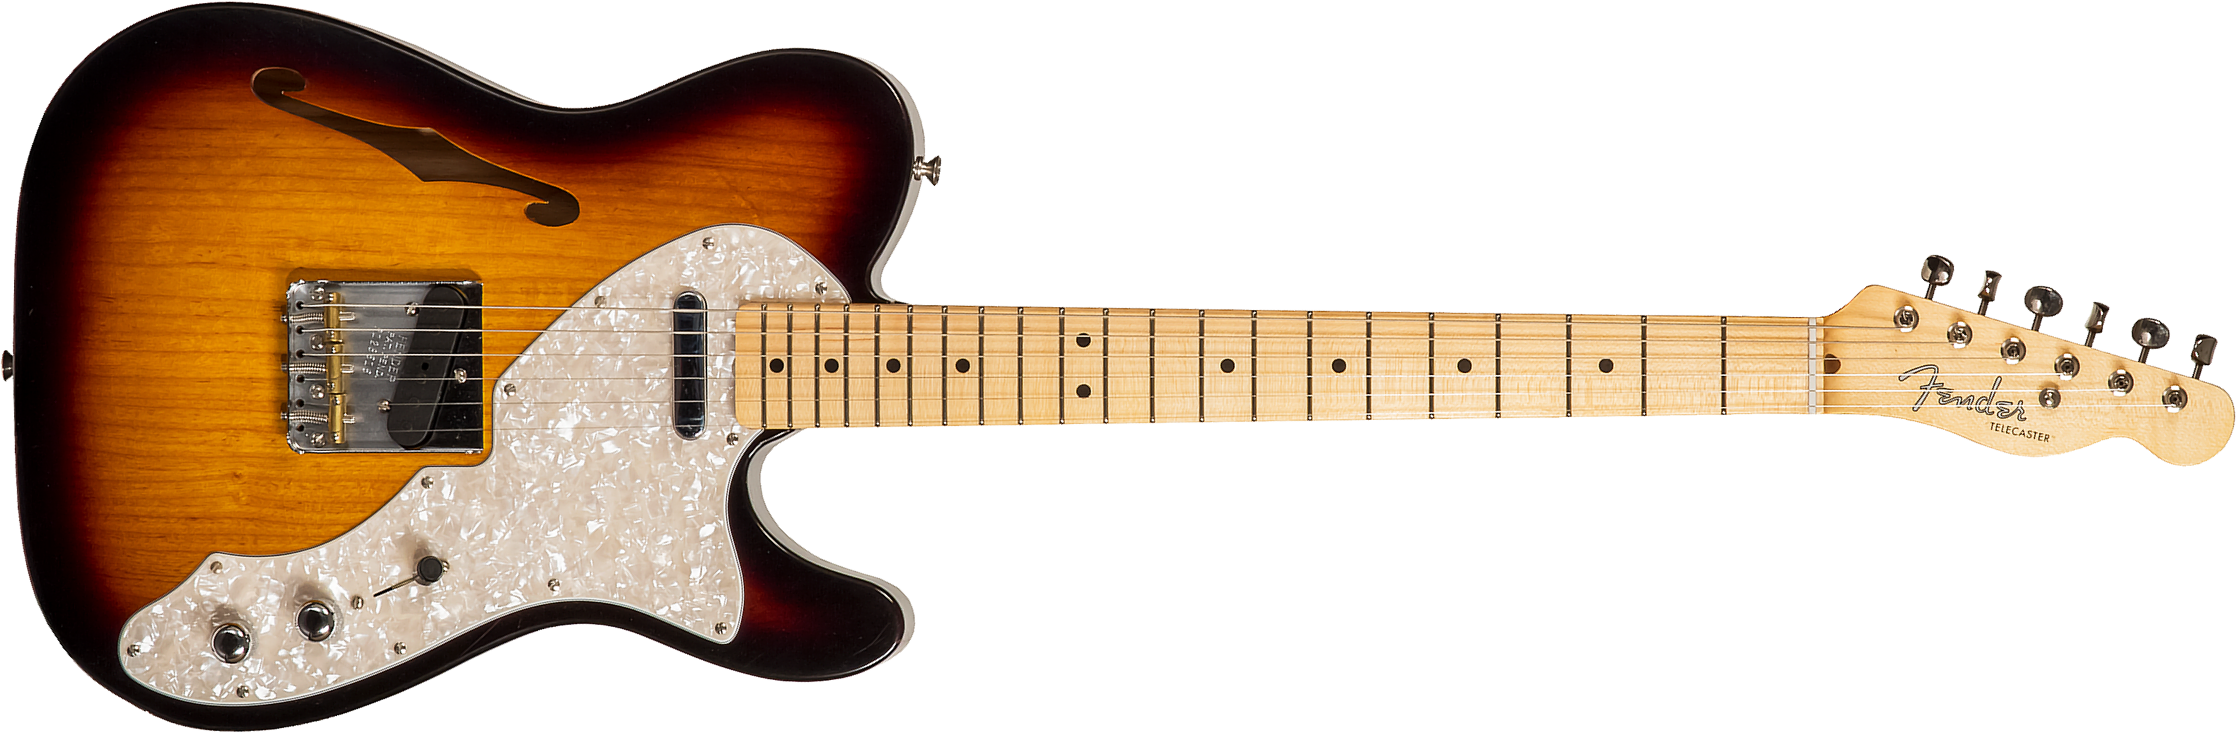 Fender Custom Shop Tele Thinline '50s 2s Ht Mn #r128616 - Closet Classic 2-color Sunburst - Guitarra eléctrica con forma de tel - Main picture